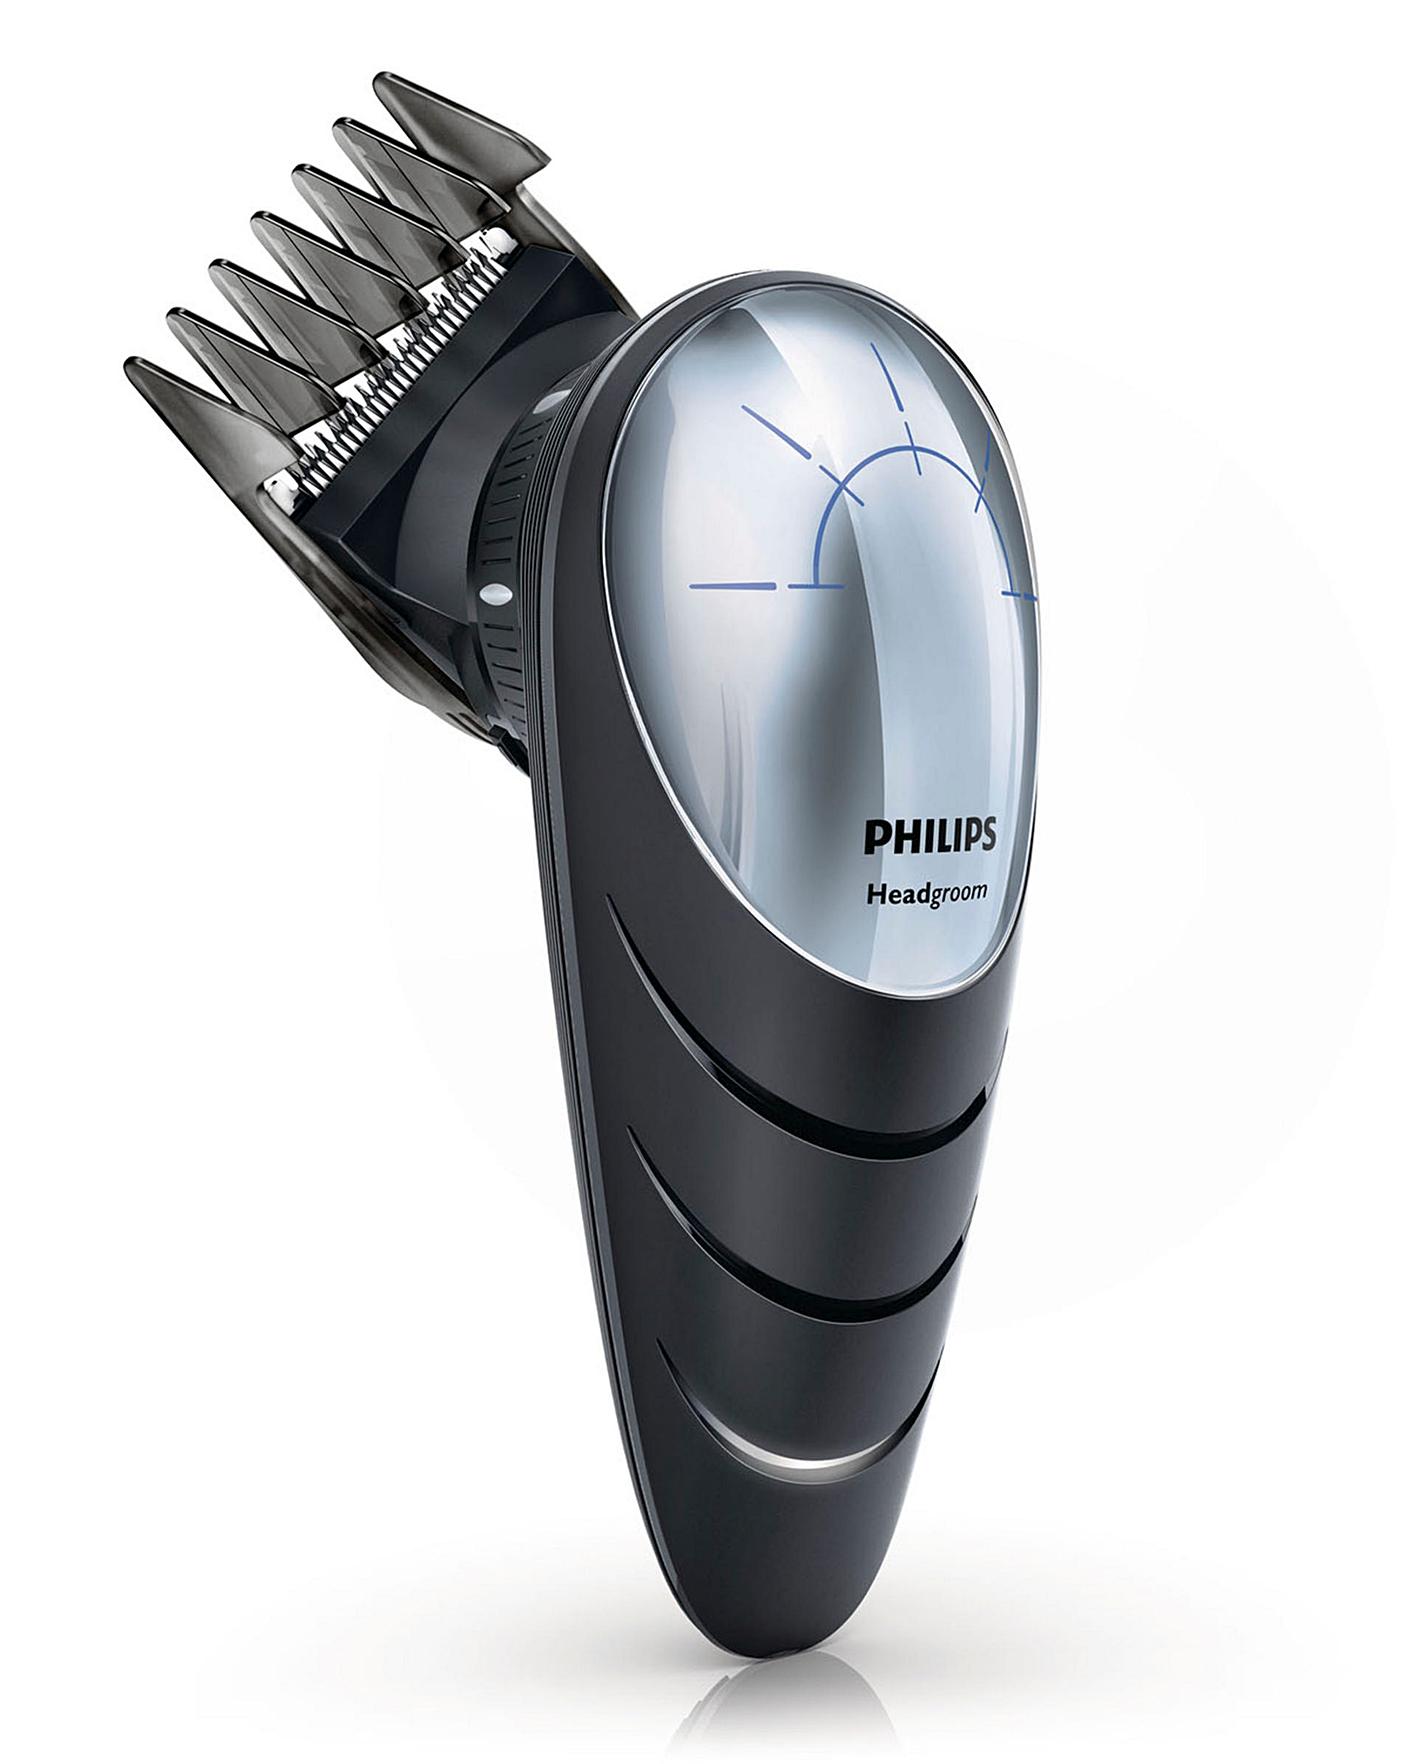 philips head hair trimmer